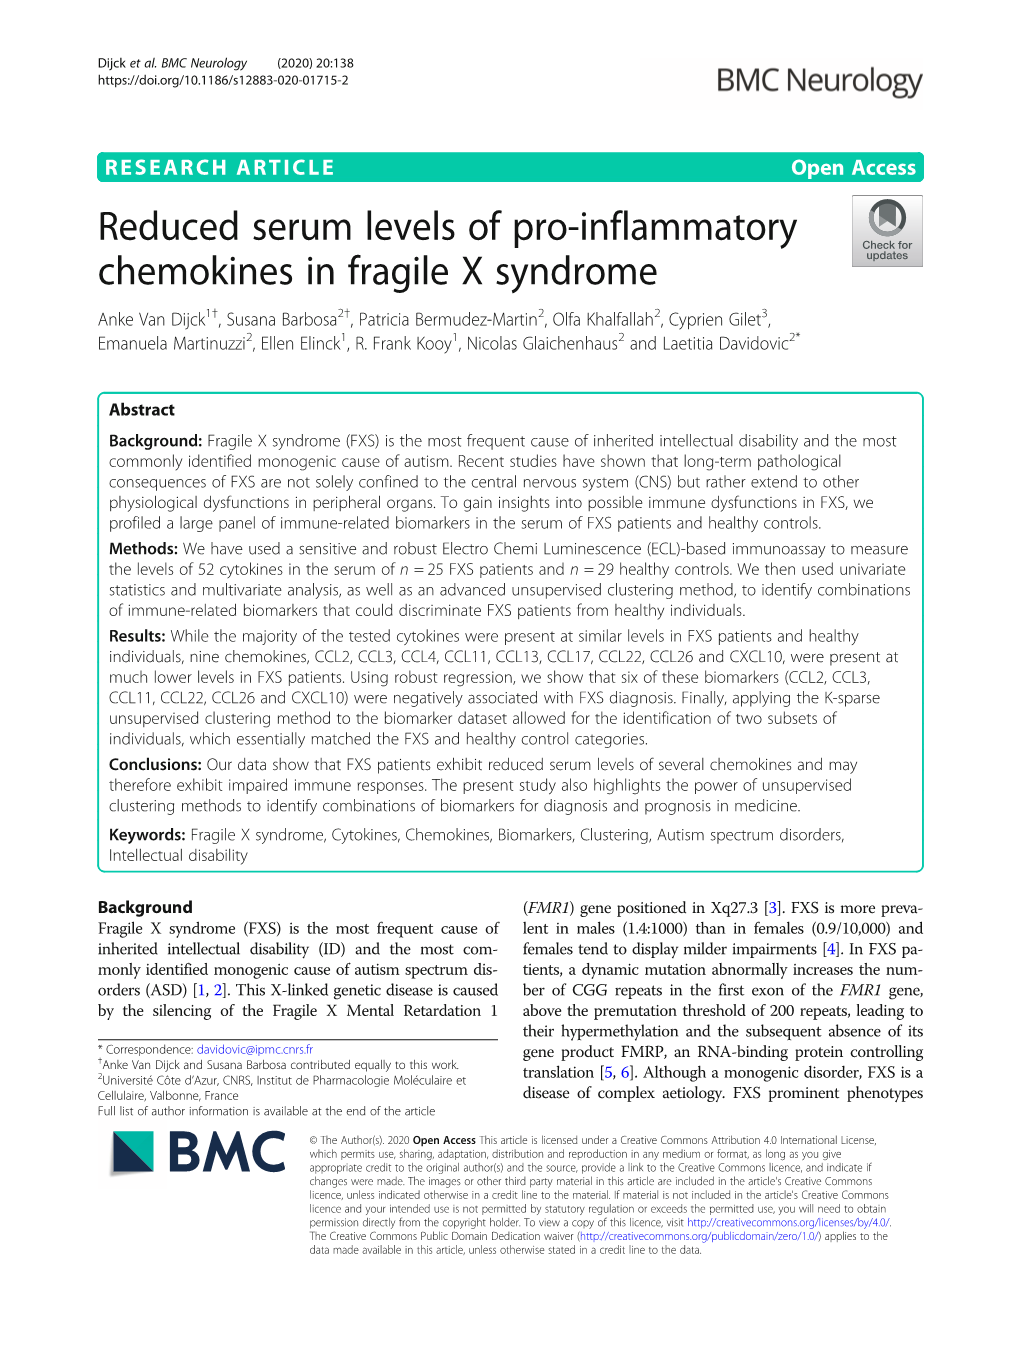 Reduced Serum Levels of Pro-Inflammatory Chemokines In